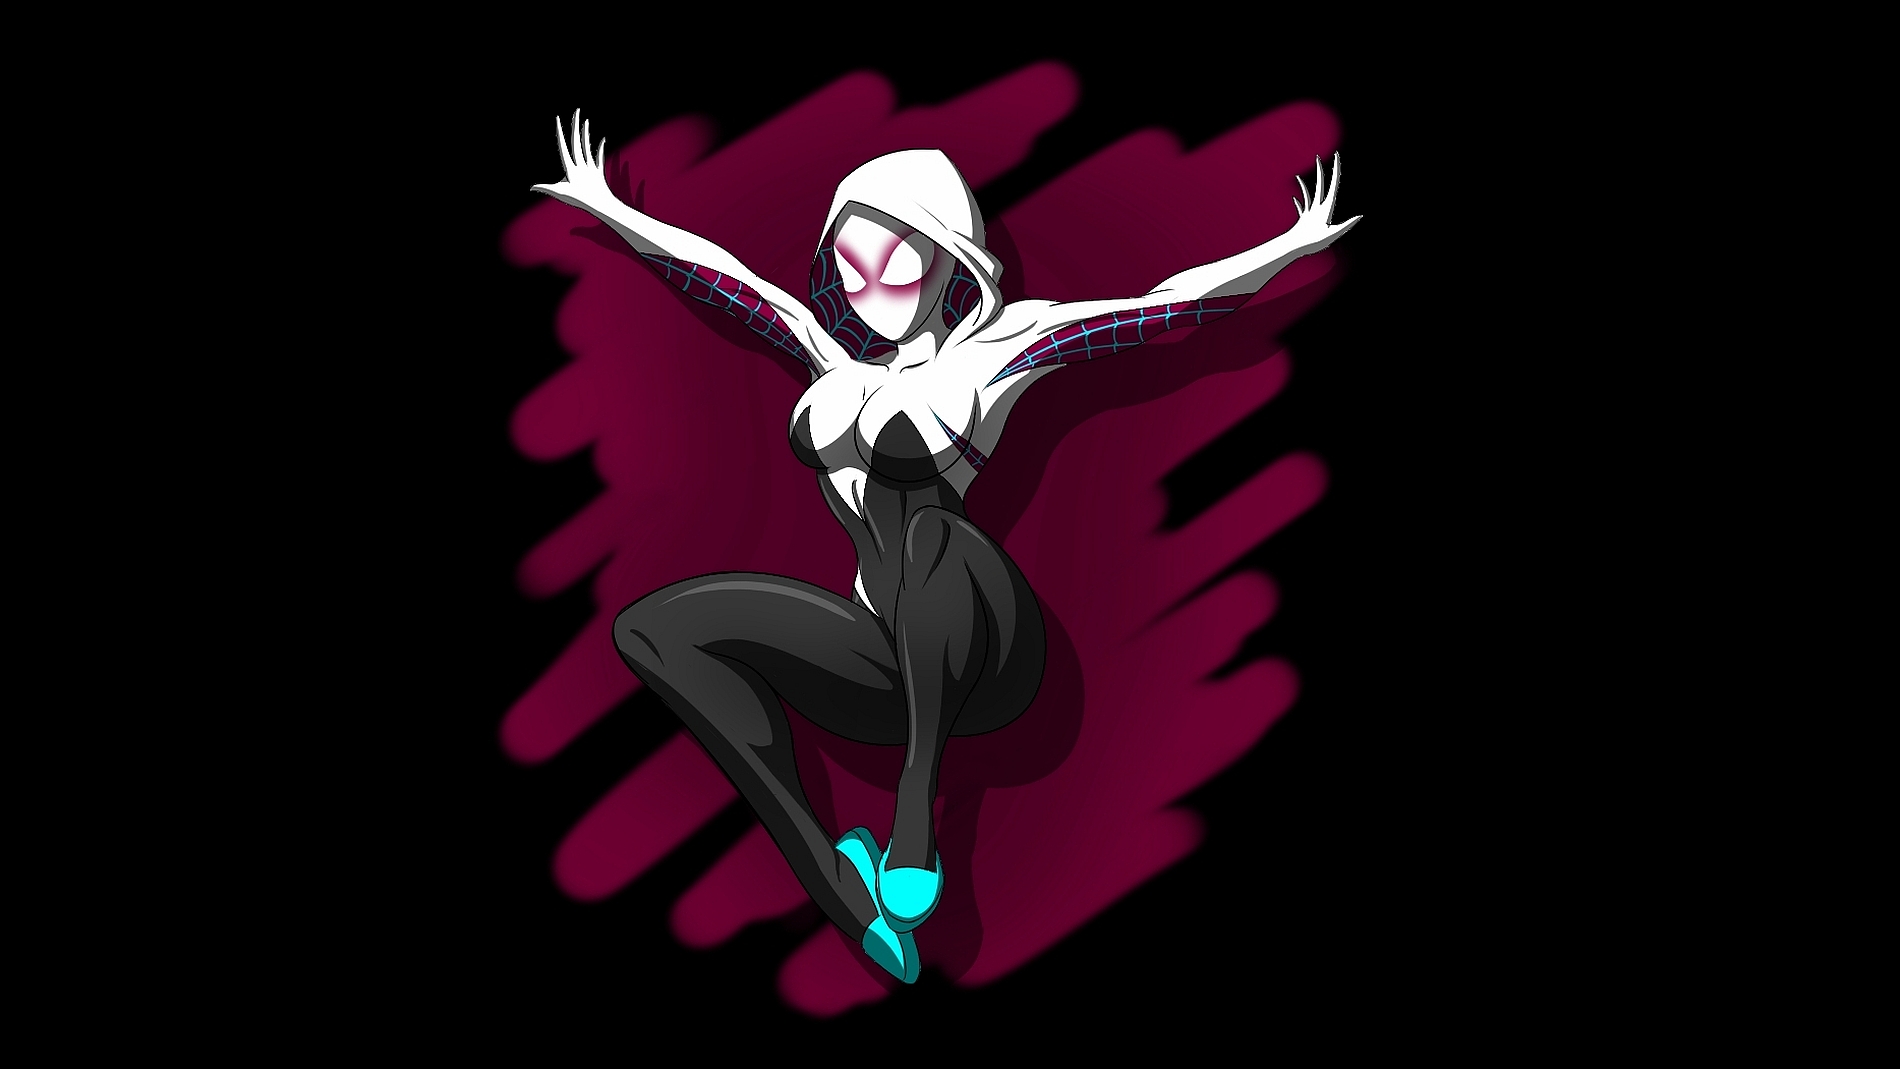 Comics Spider-Gwen HD Wallpaper Background Image.